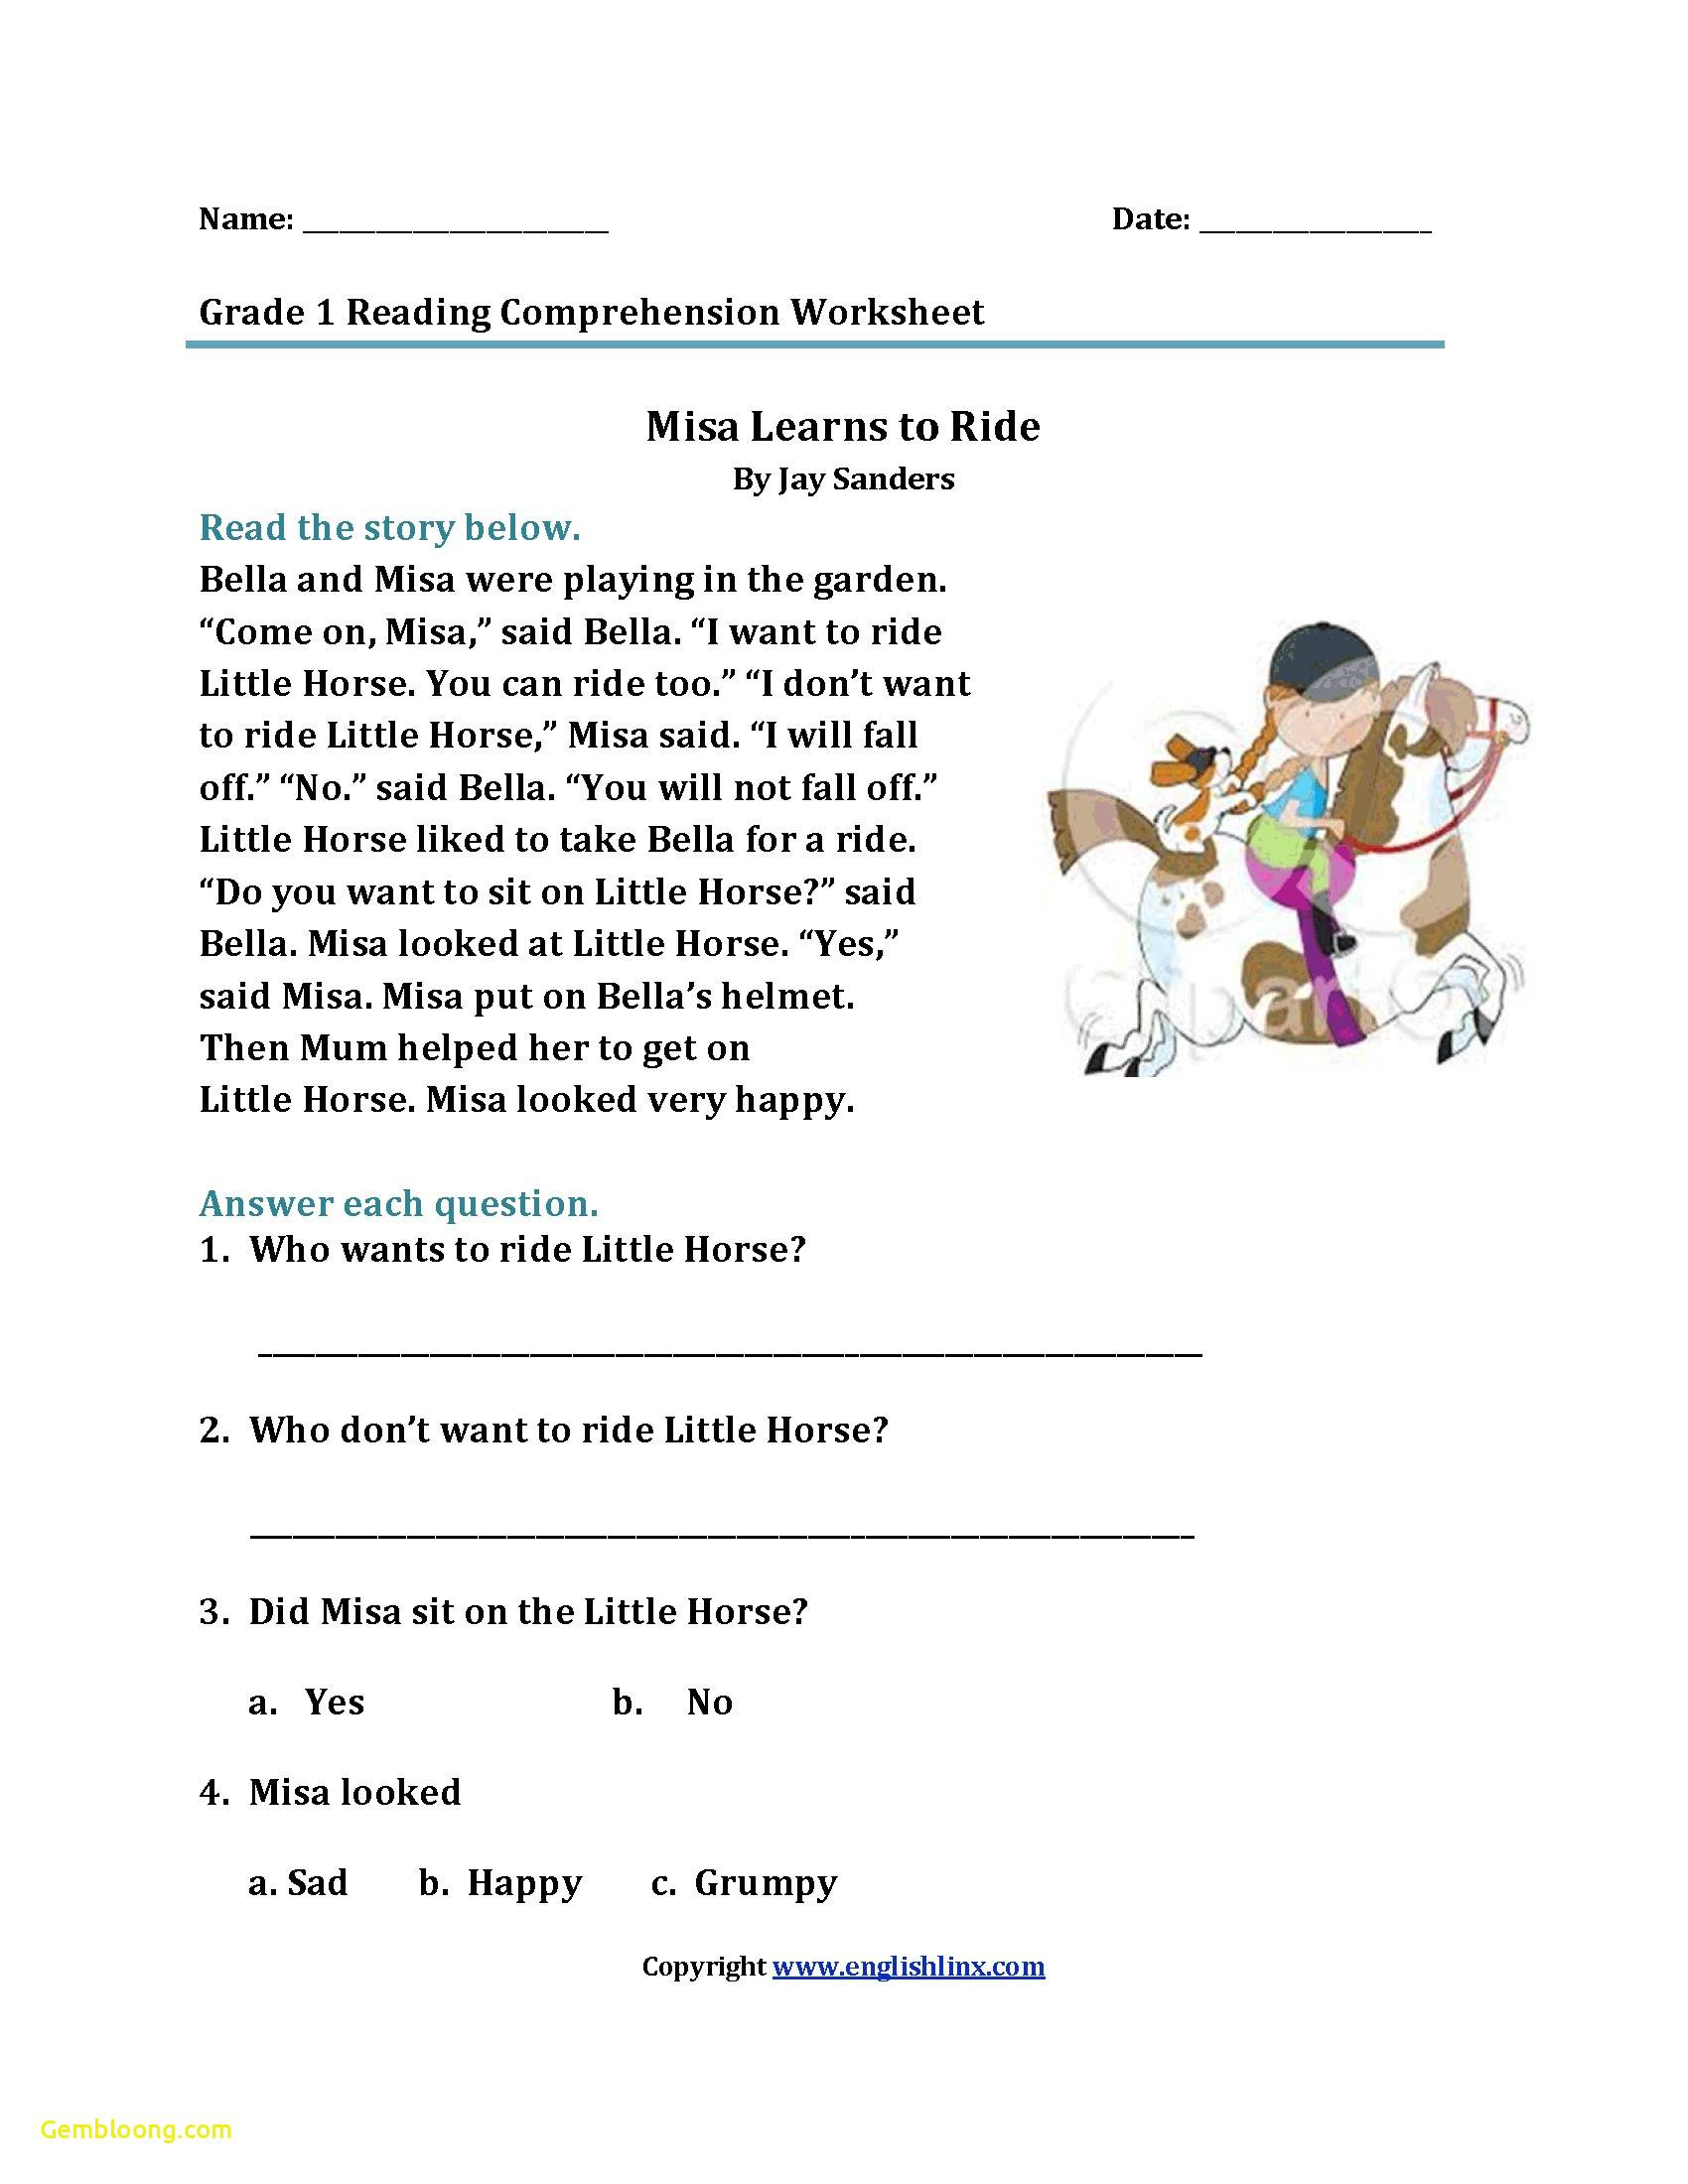 Reading Comprehension Worksheets For 1St Grade - Cramerforcongress | Free Printable Grade 1 Reading Comprehension Worksheets